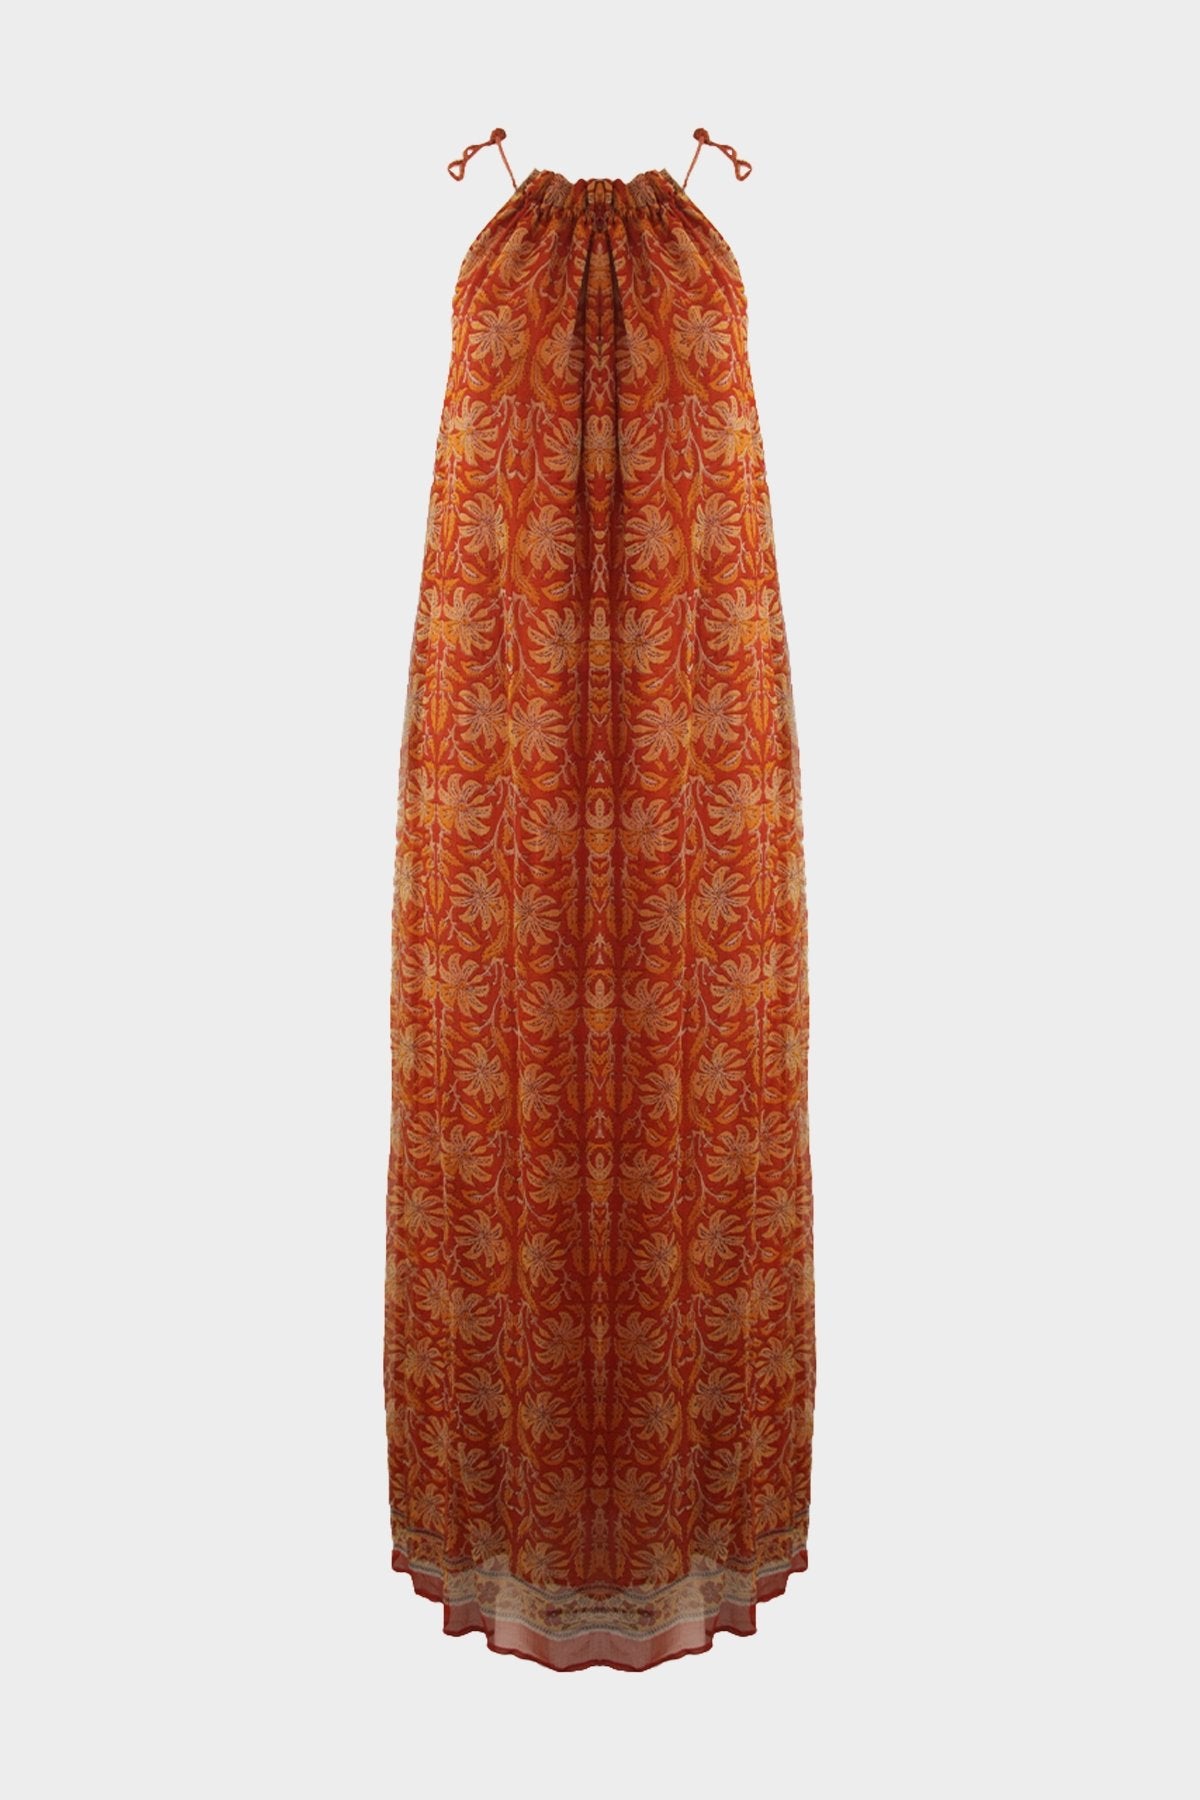 Francie Sleeveless Dress in Clementine - shop-olivia.com